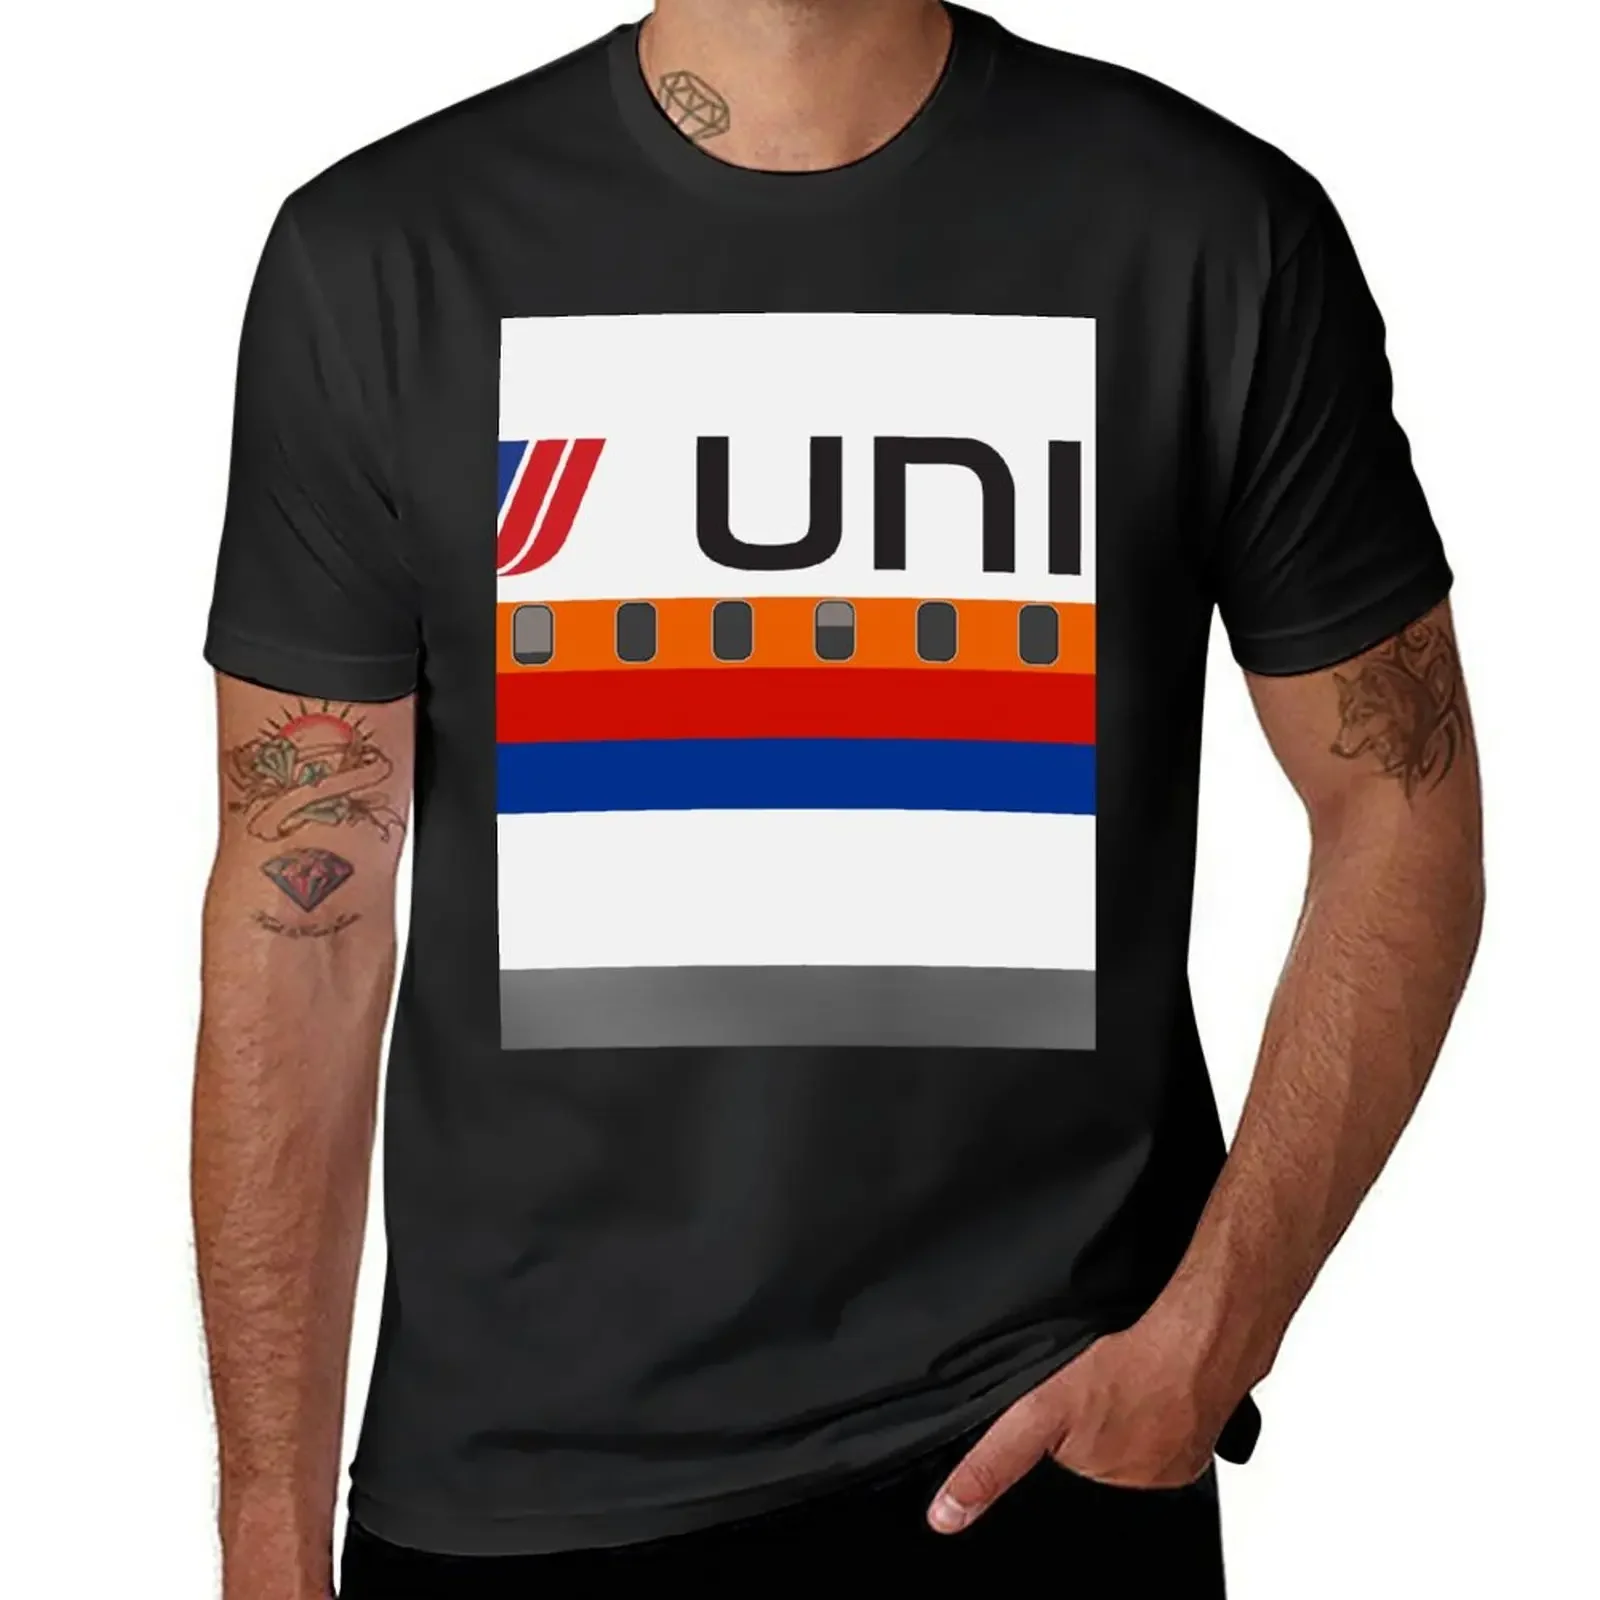 

Plane Tees - United Airlines (Saul Bass) T-Shirt cute tops animal prinfor boys blacks mens clothes